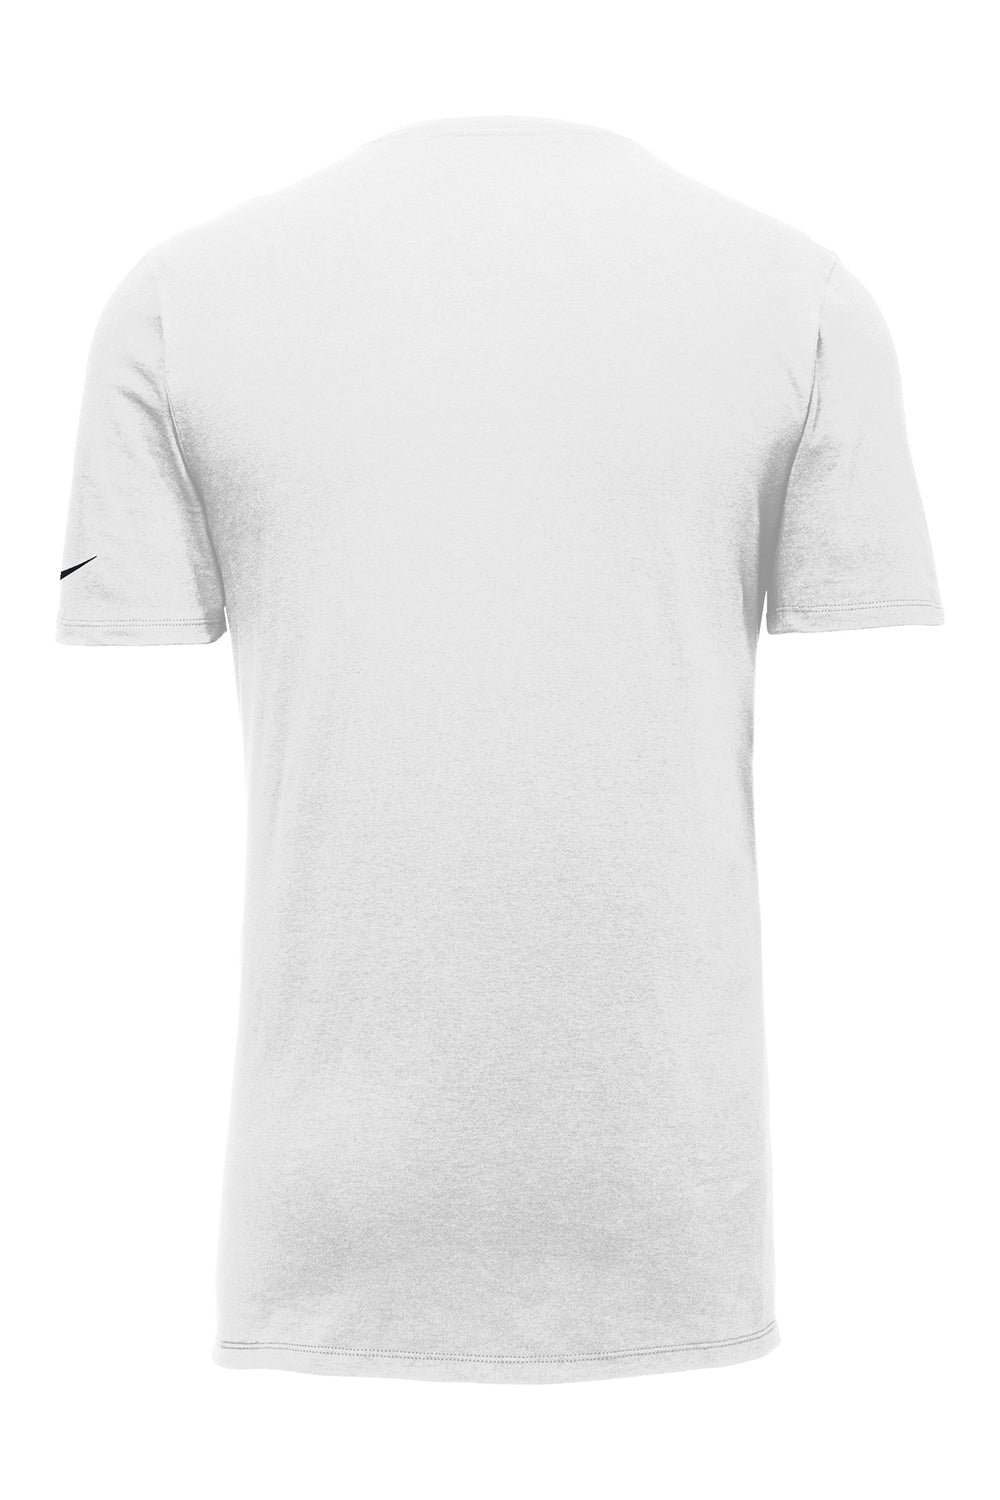 Nike NKBQ5231 Mens Dri-Fit Moisture Wicking Short Sleeve Crewneck T-Shirt White Flat Back